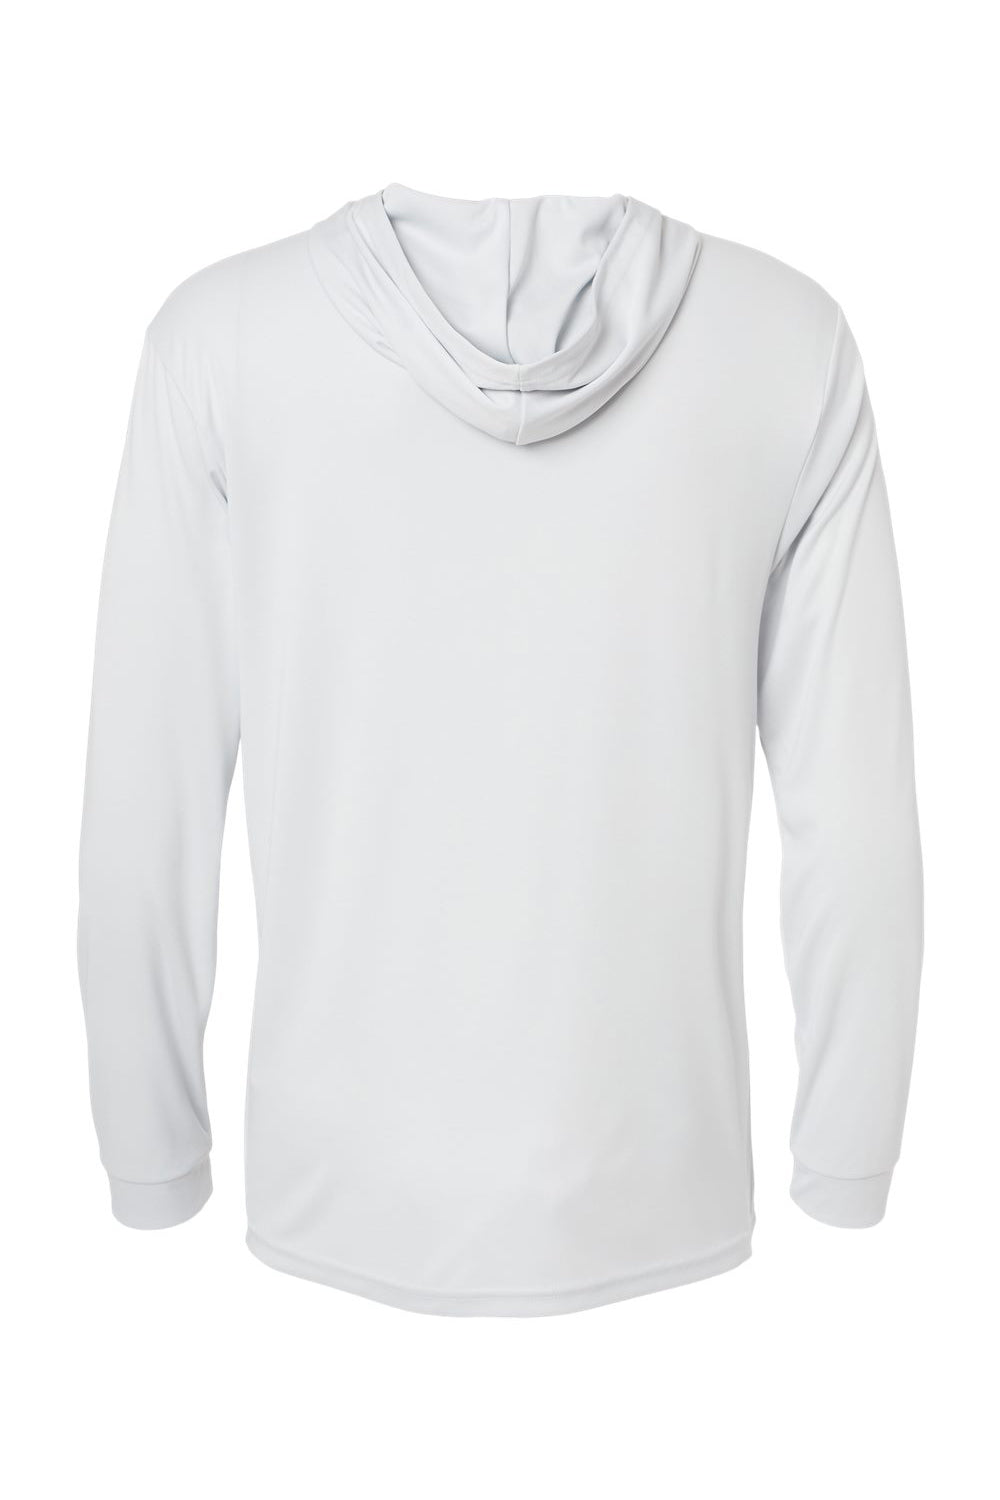 Paragon 220 Mens Bahama Performance Long Sleeve Hooded T-Shirt Hoodie Aluminum Grey Flat Back